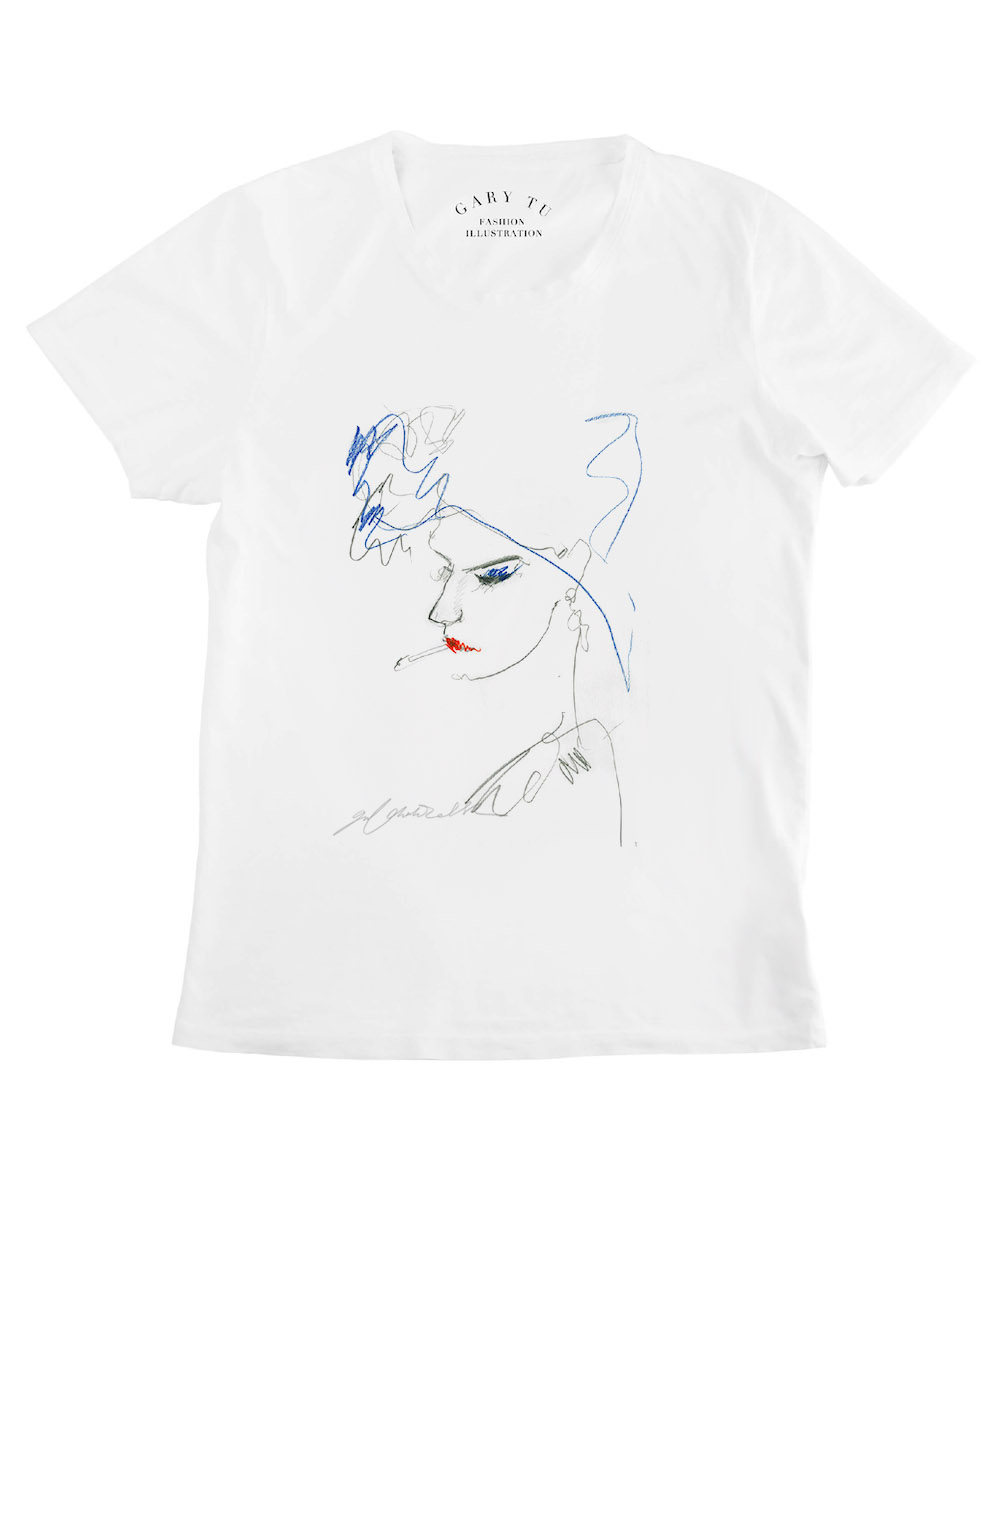 T-shirt Drawing 001-2